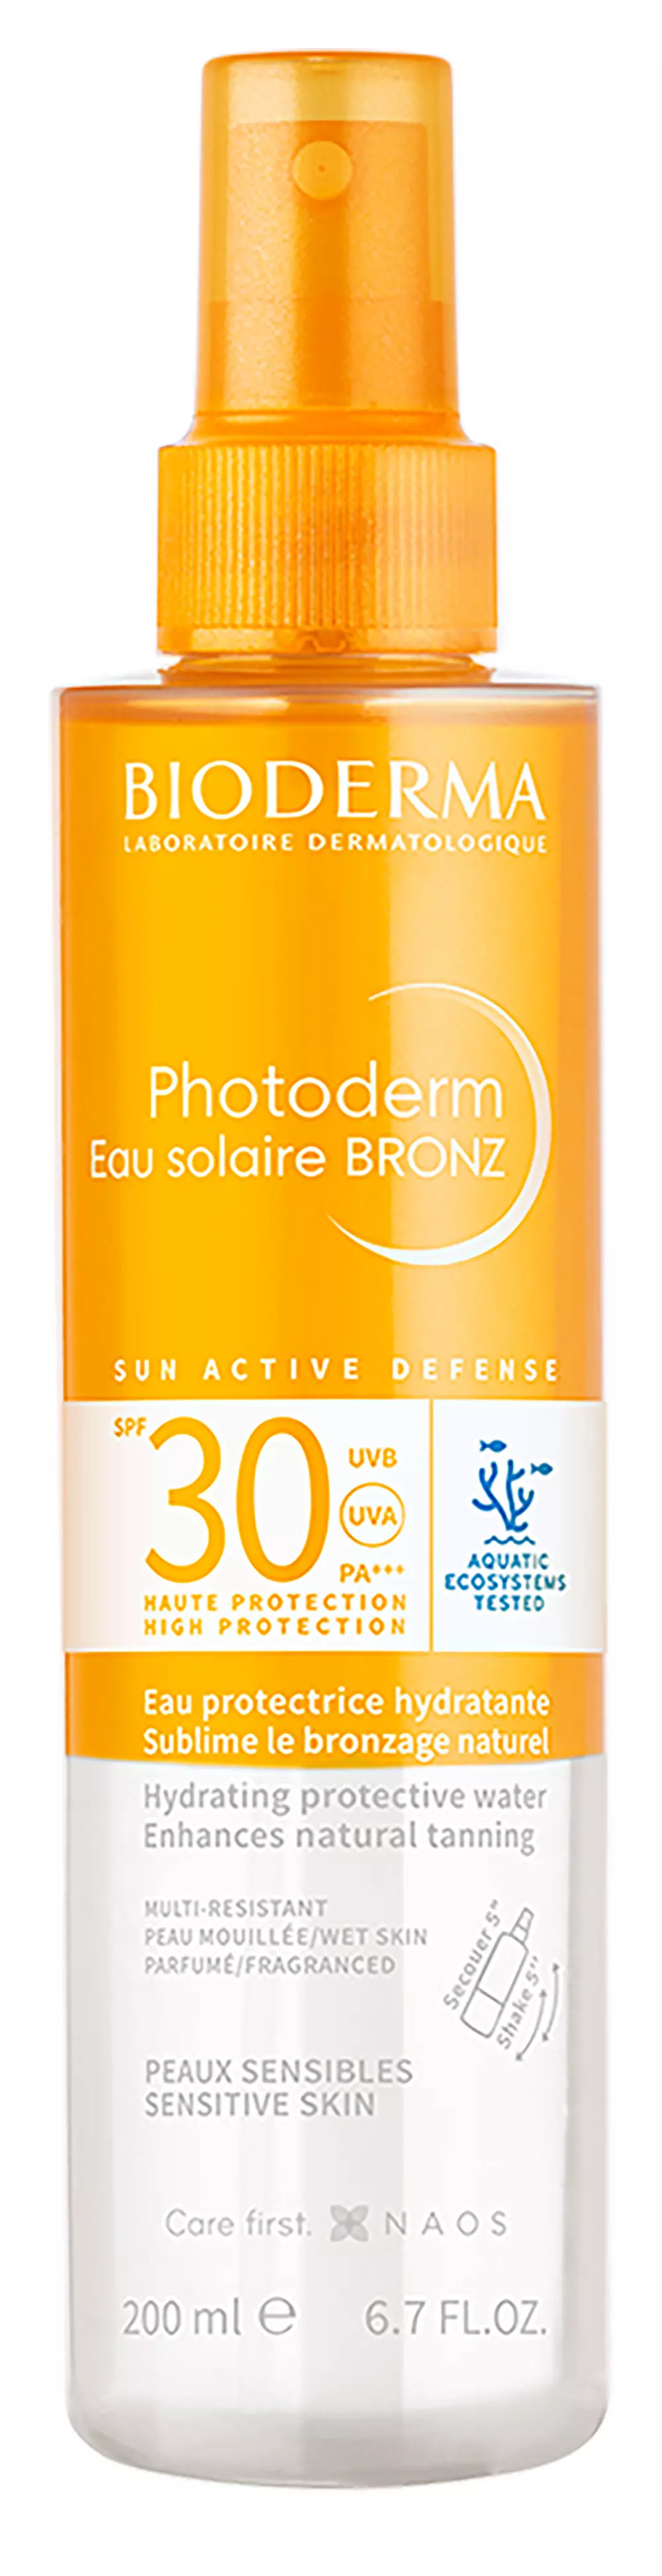 BIODERMA Photoderm Eau solaire BRONZ SPF30 200ml